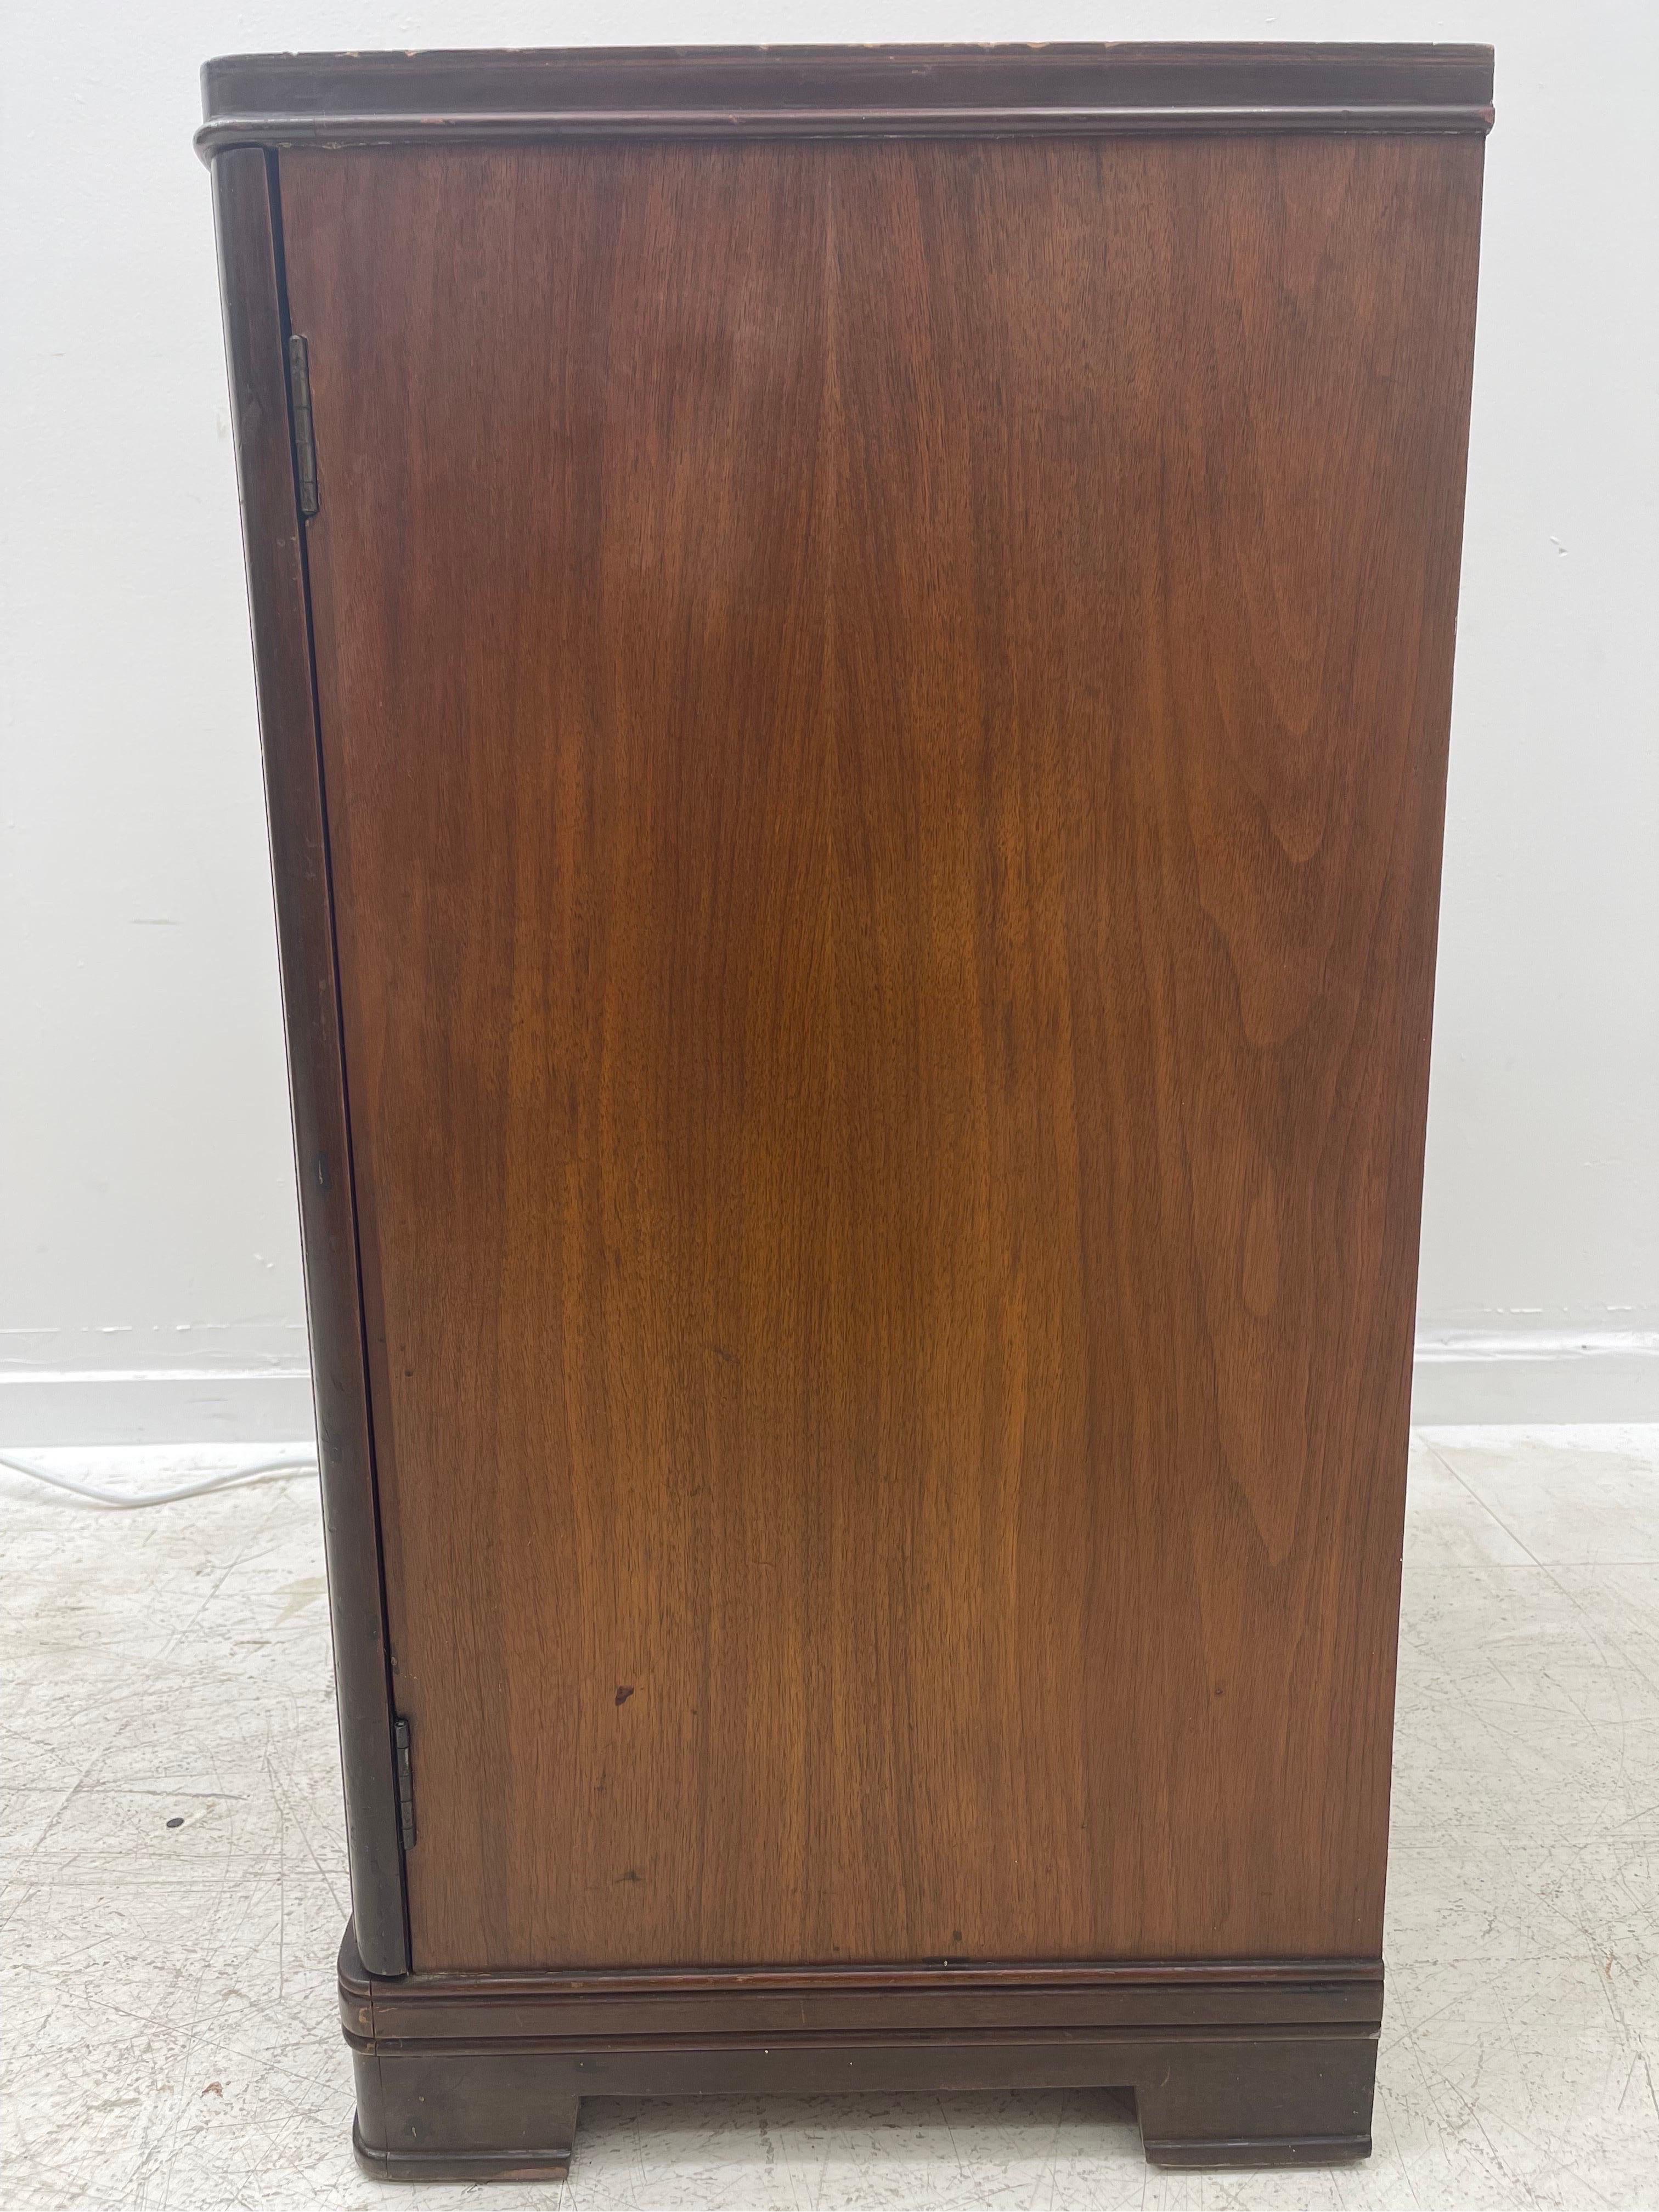 Wood Vintage Art Deco Cabinet Storage For Sale